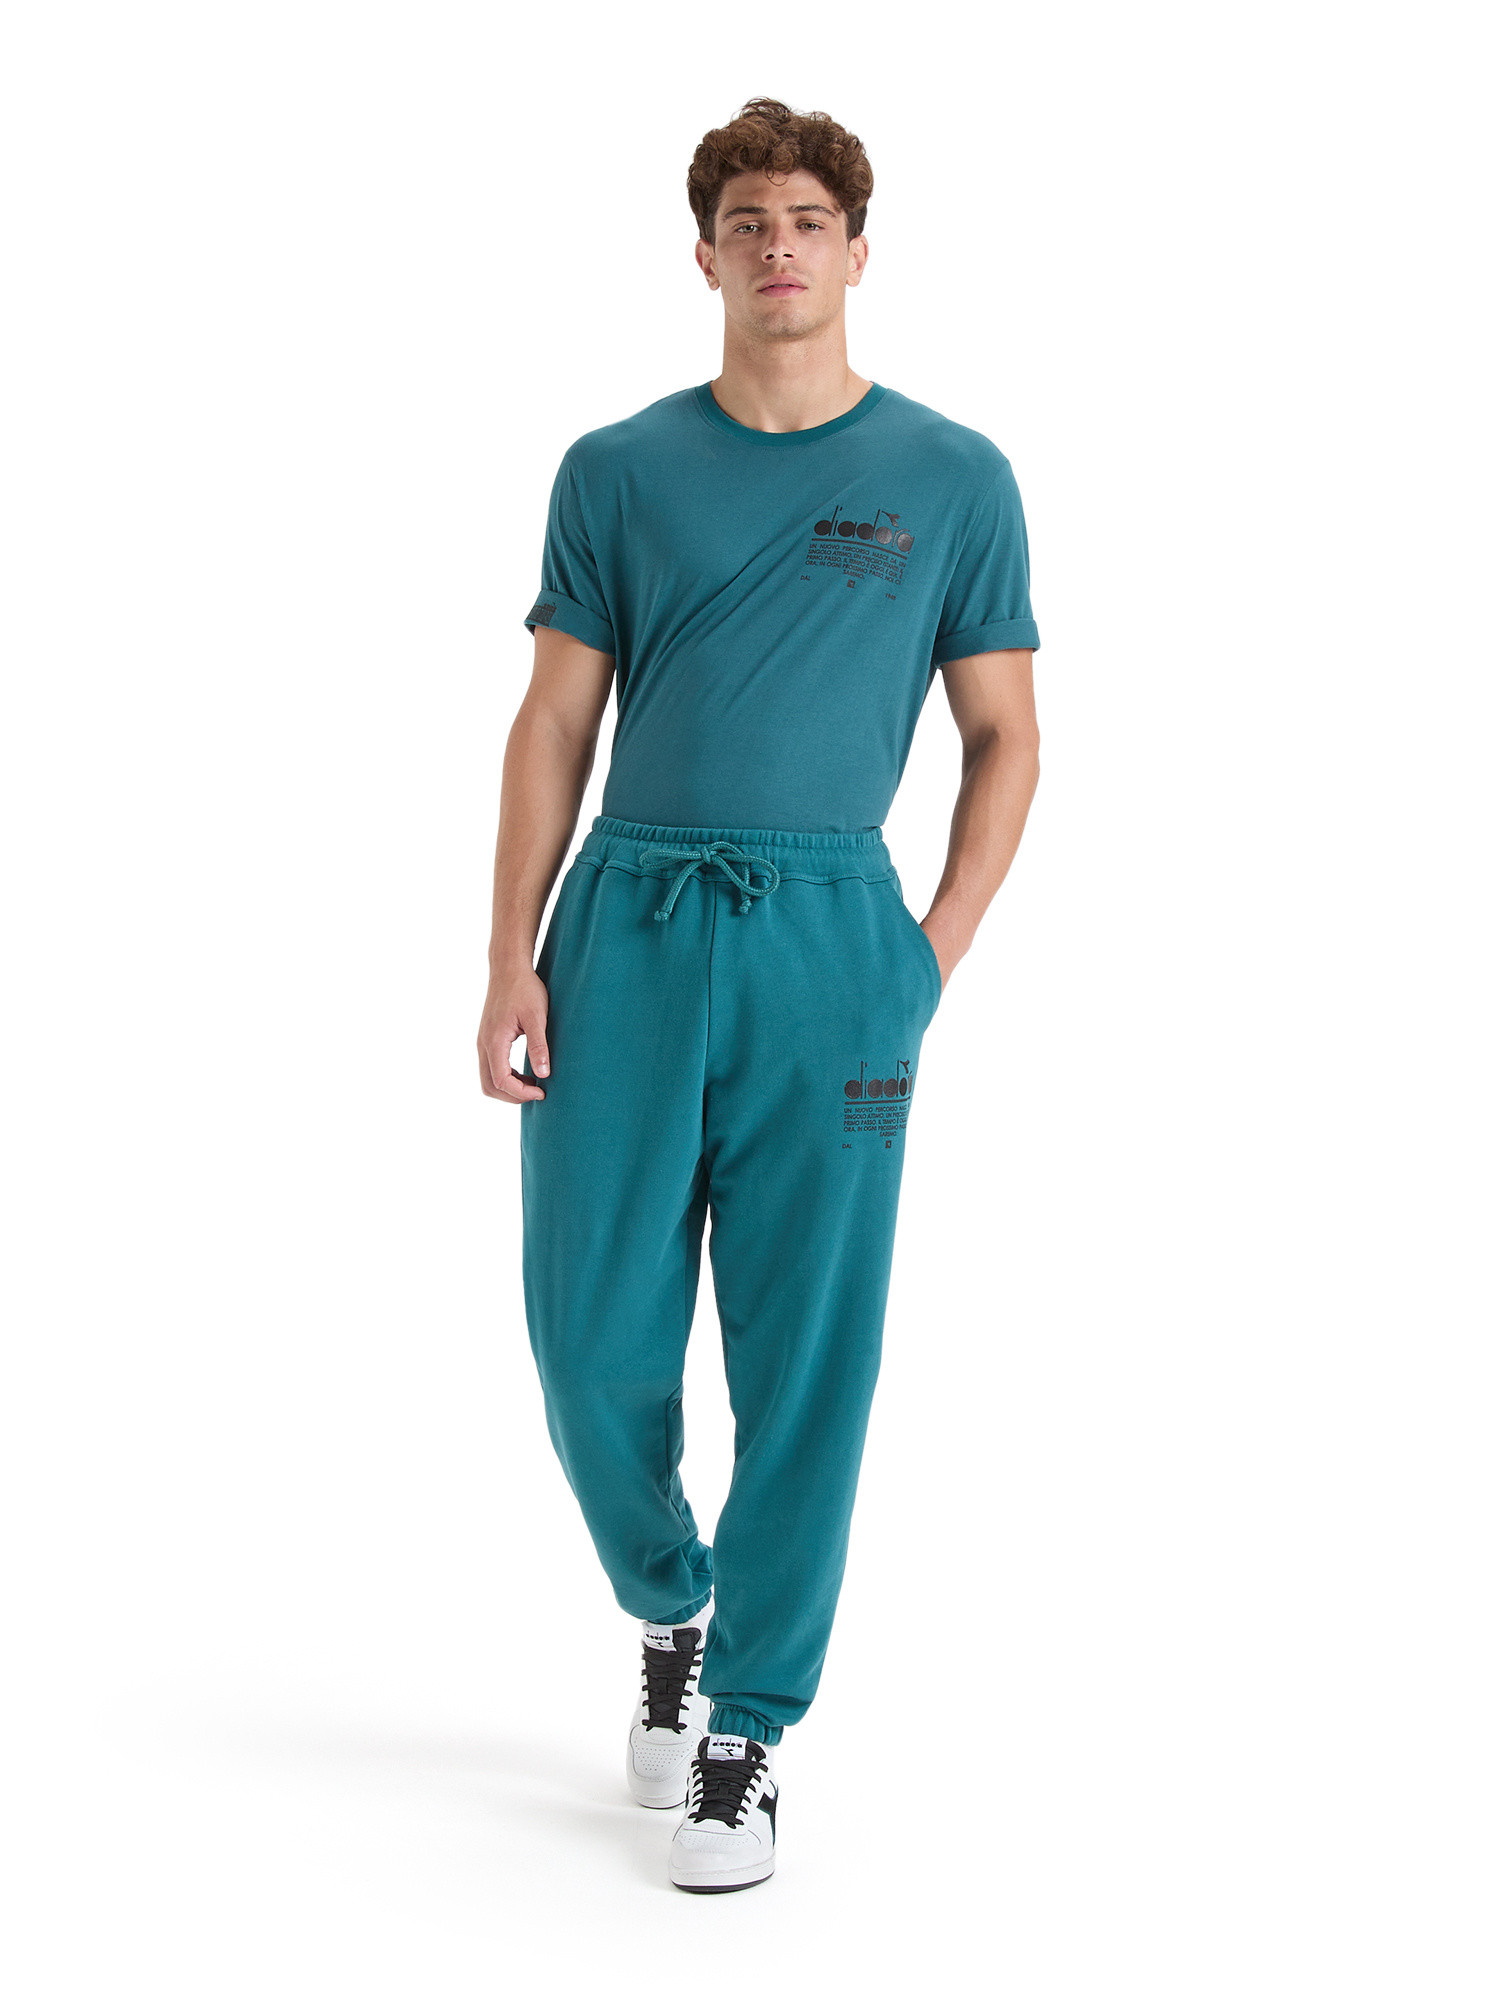 Diadora - Manifesto sports trousers with cotton print, Petroleum , large image number 2